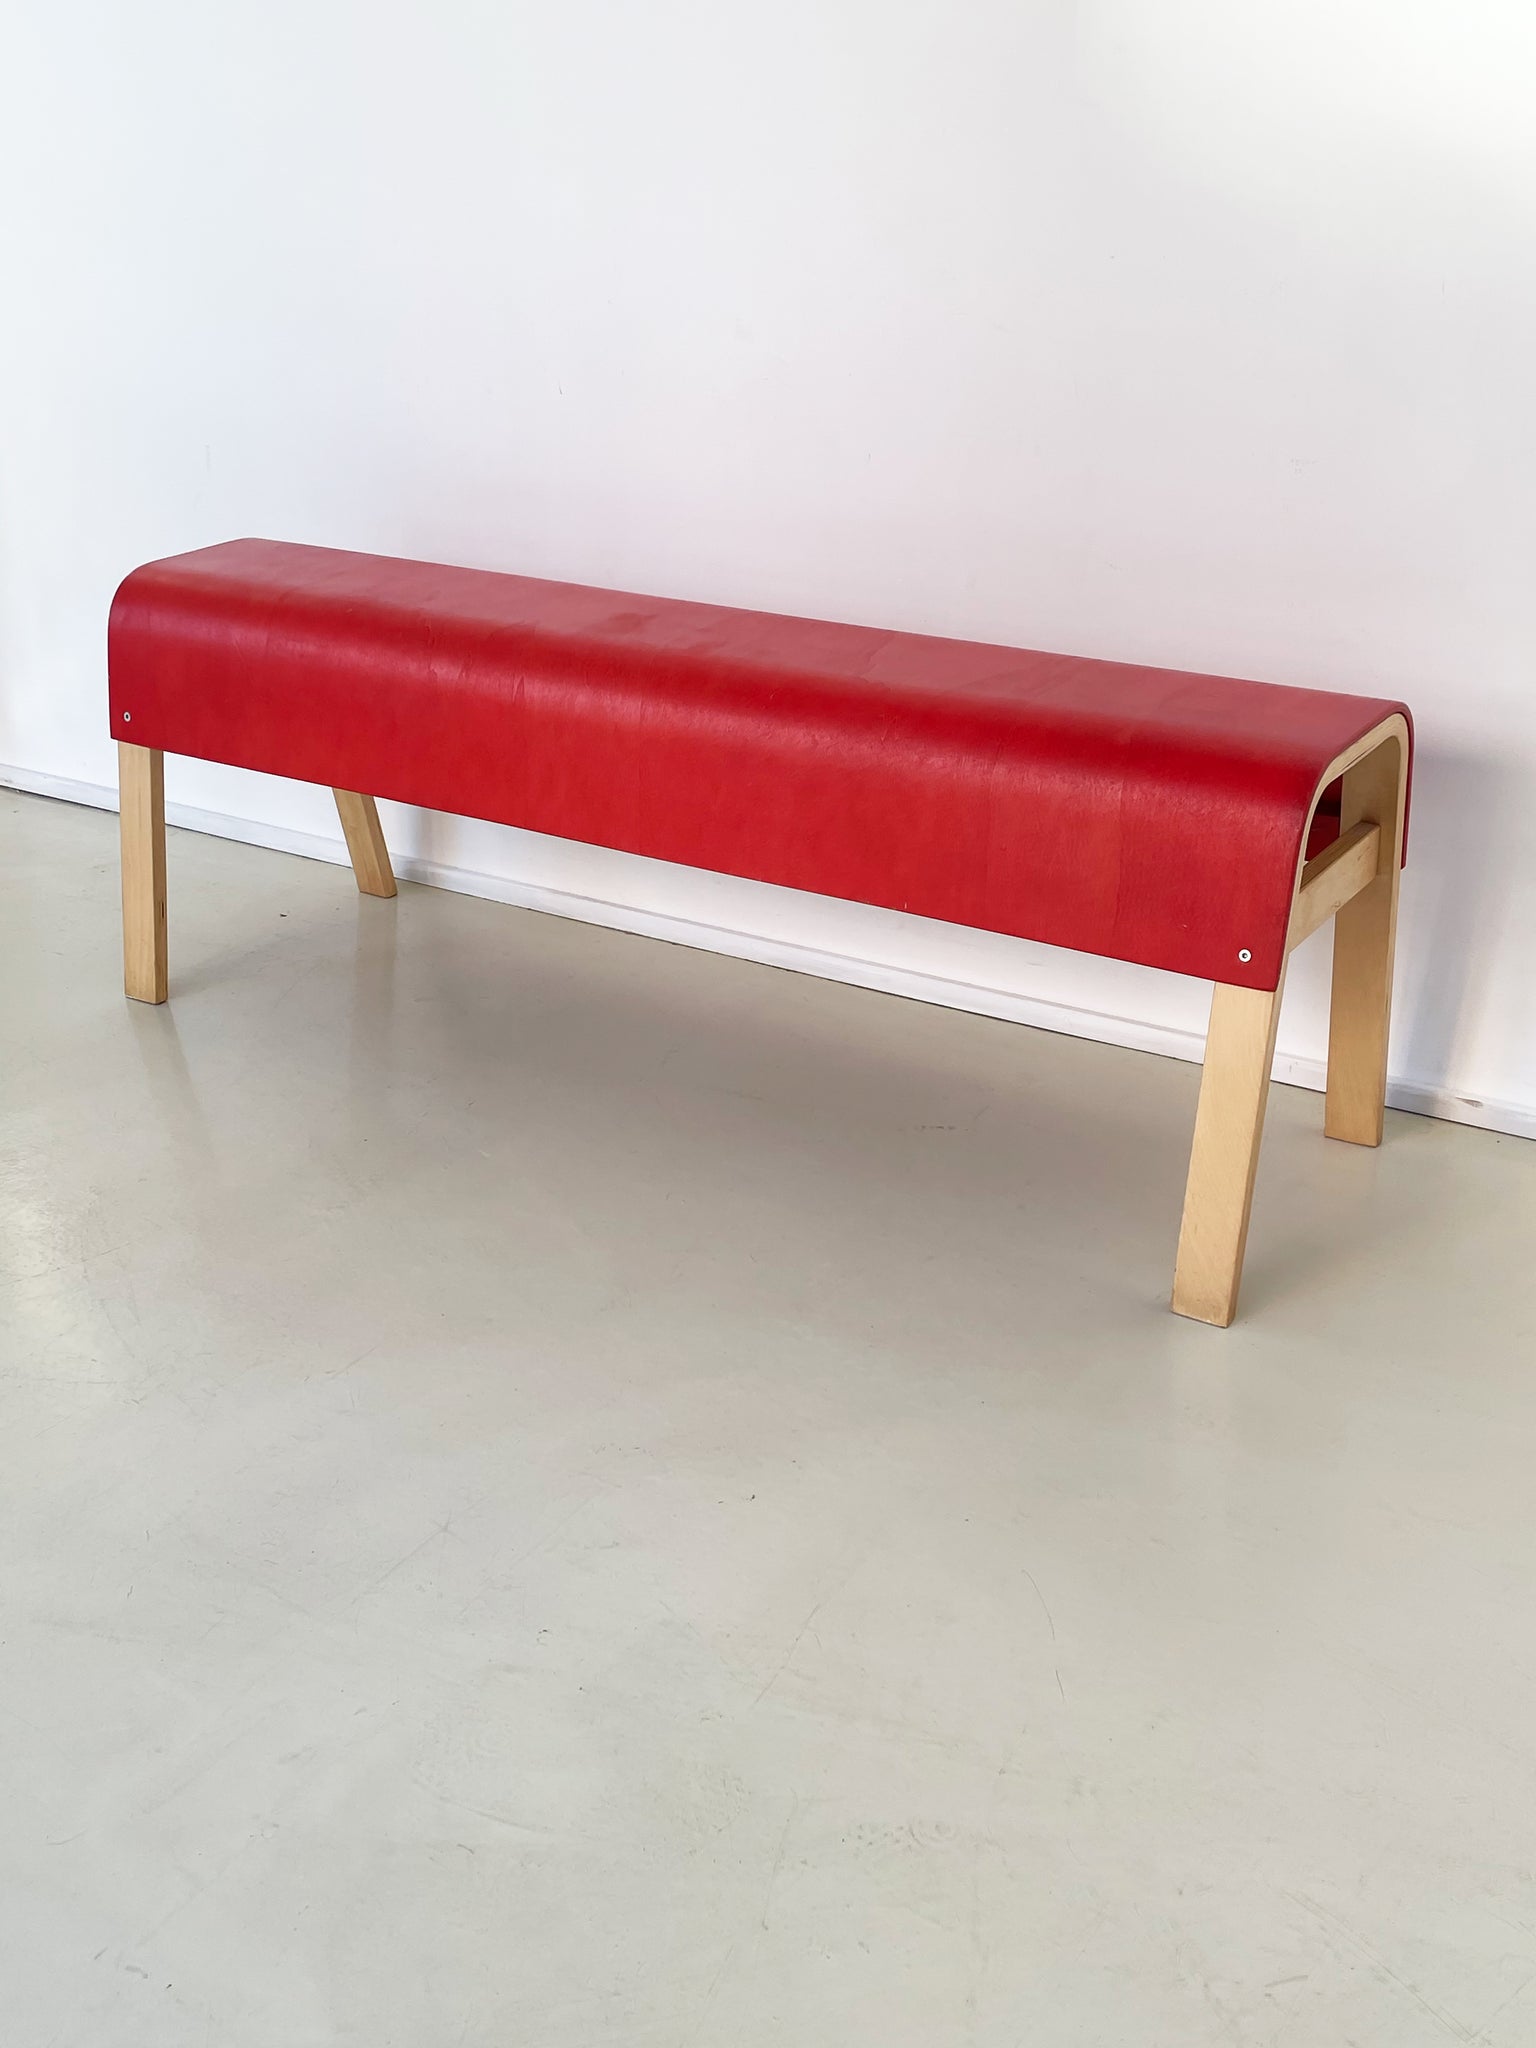 Vintage IKEA Bentwood Red Top Bench